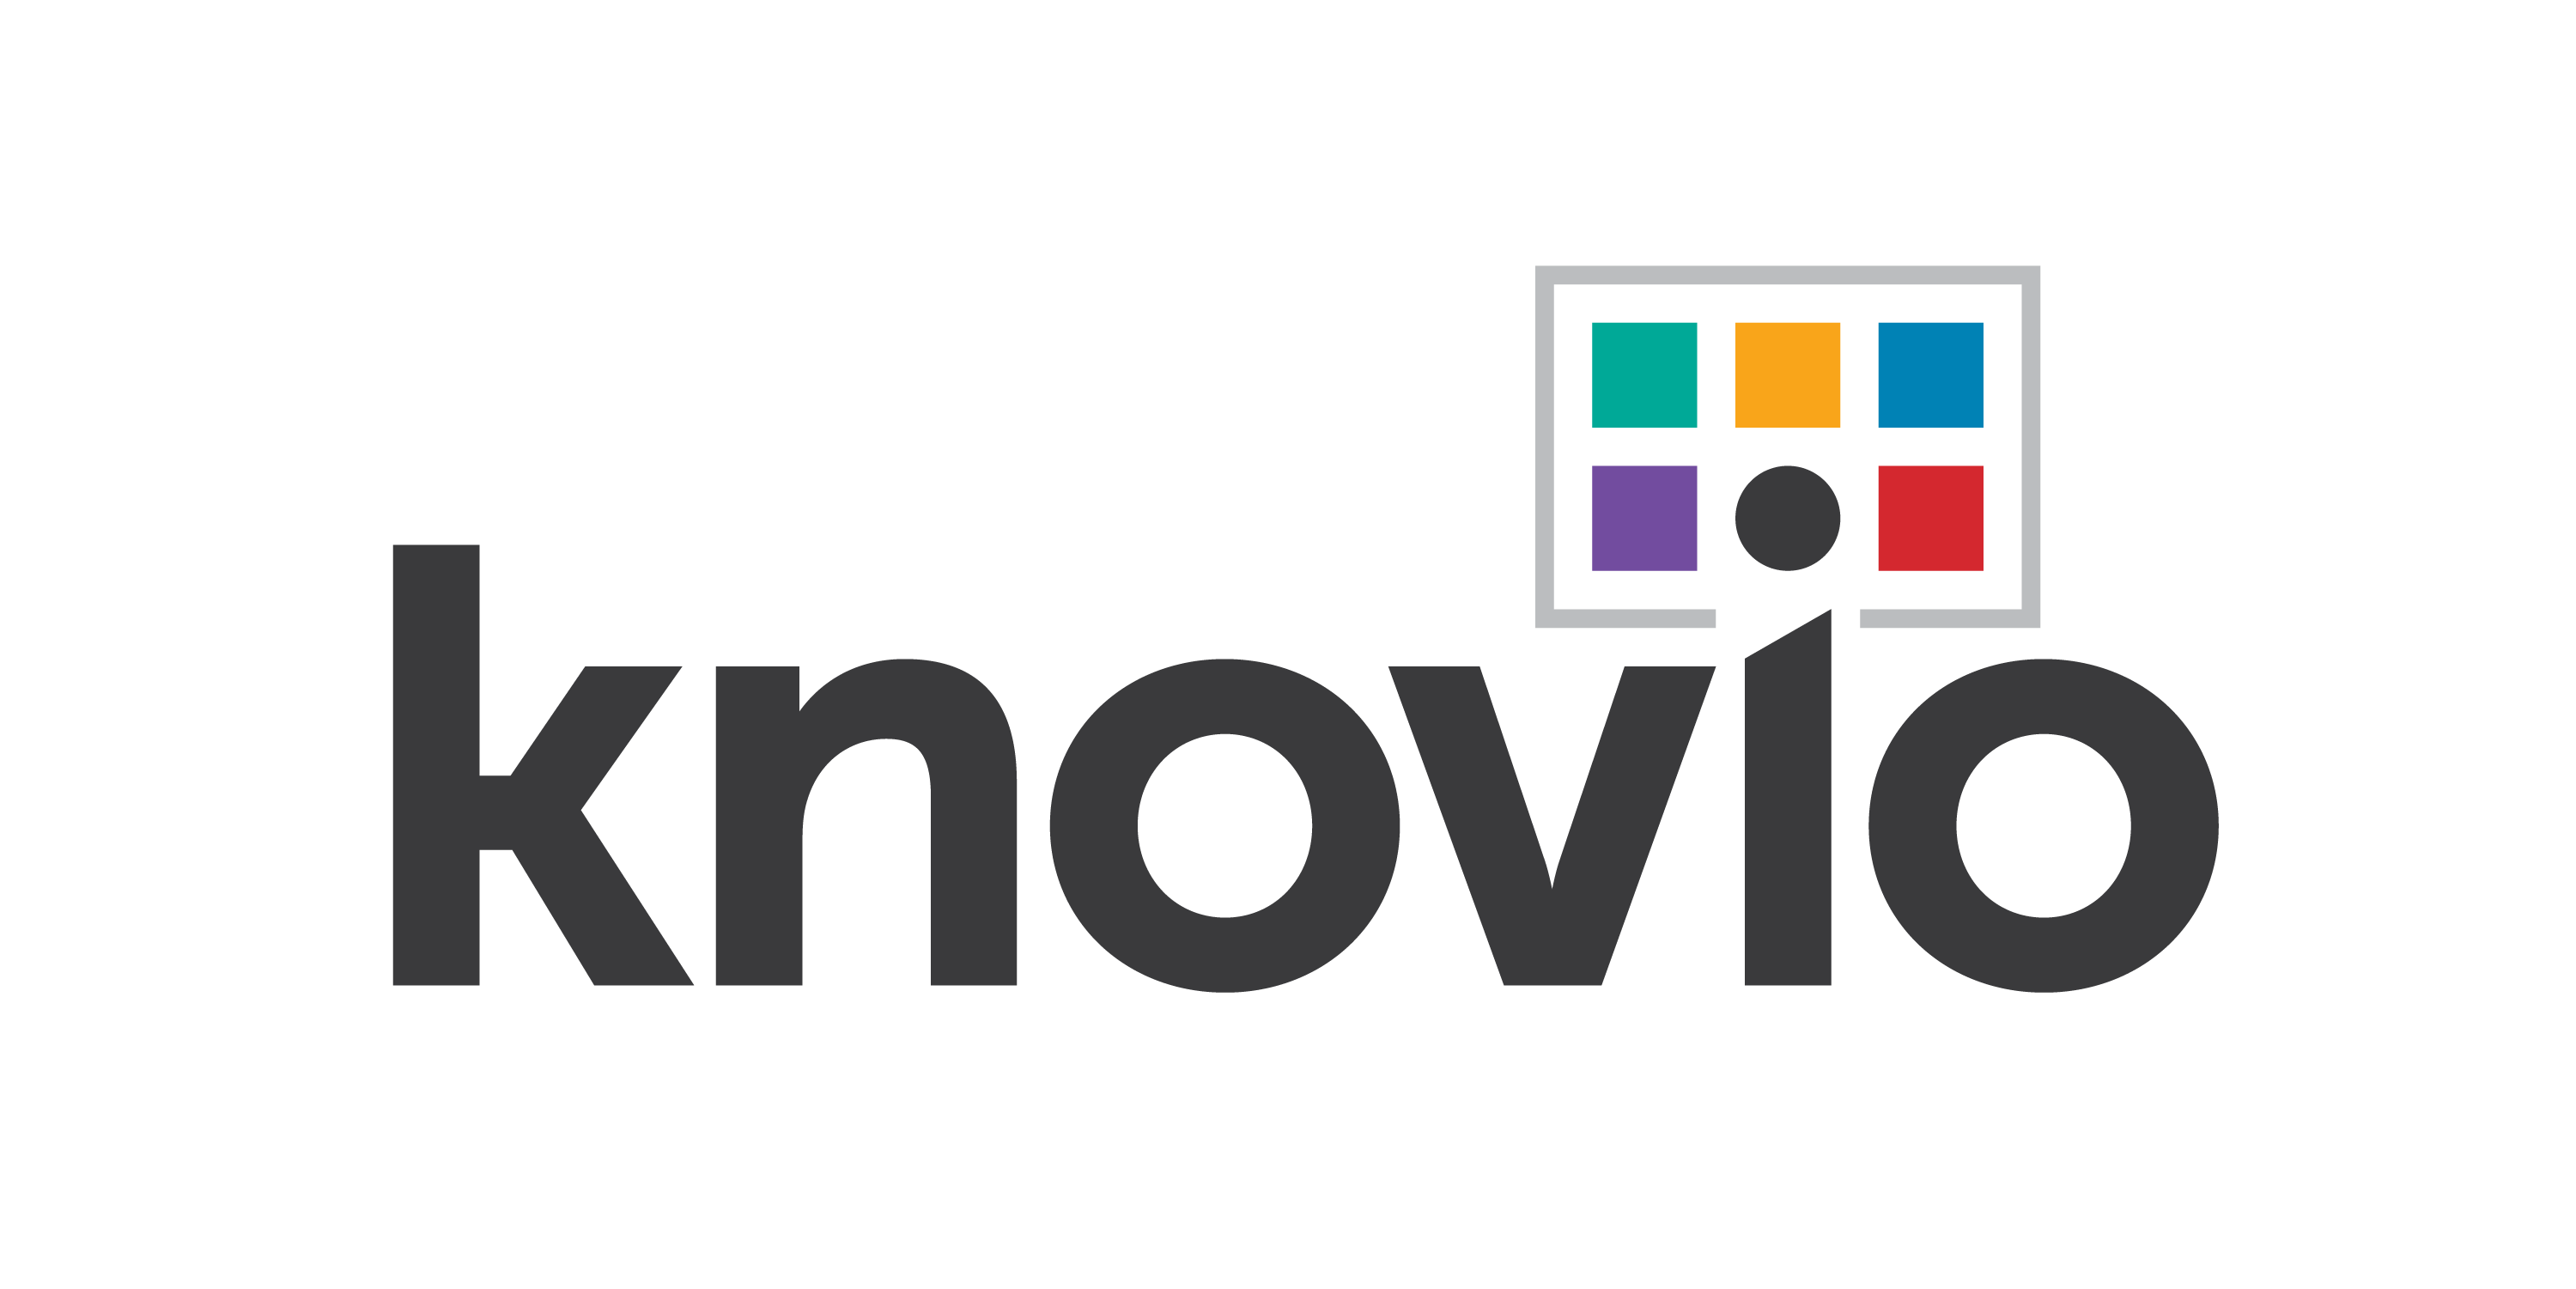 Knovio smart media platform logo